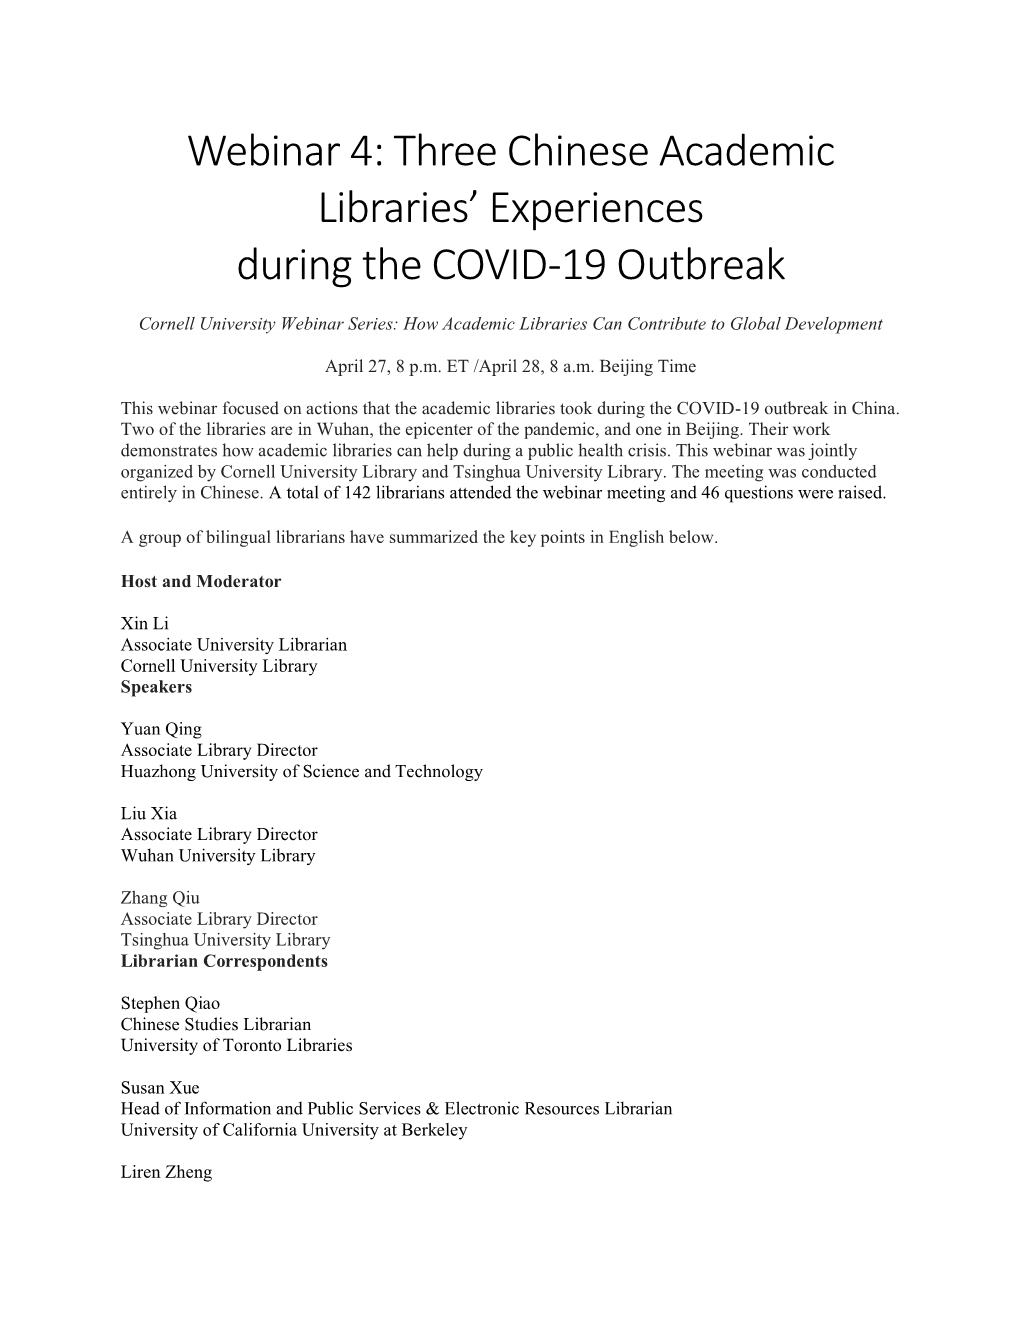 Webinar 4: Three Chinese Academic Libraries' Experiences